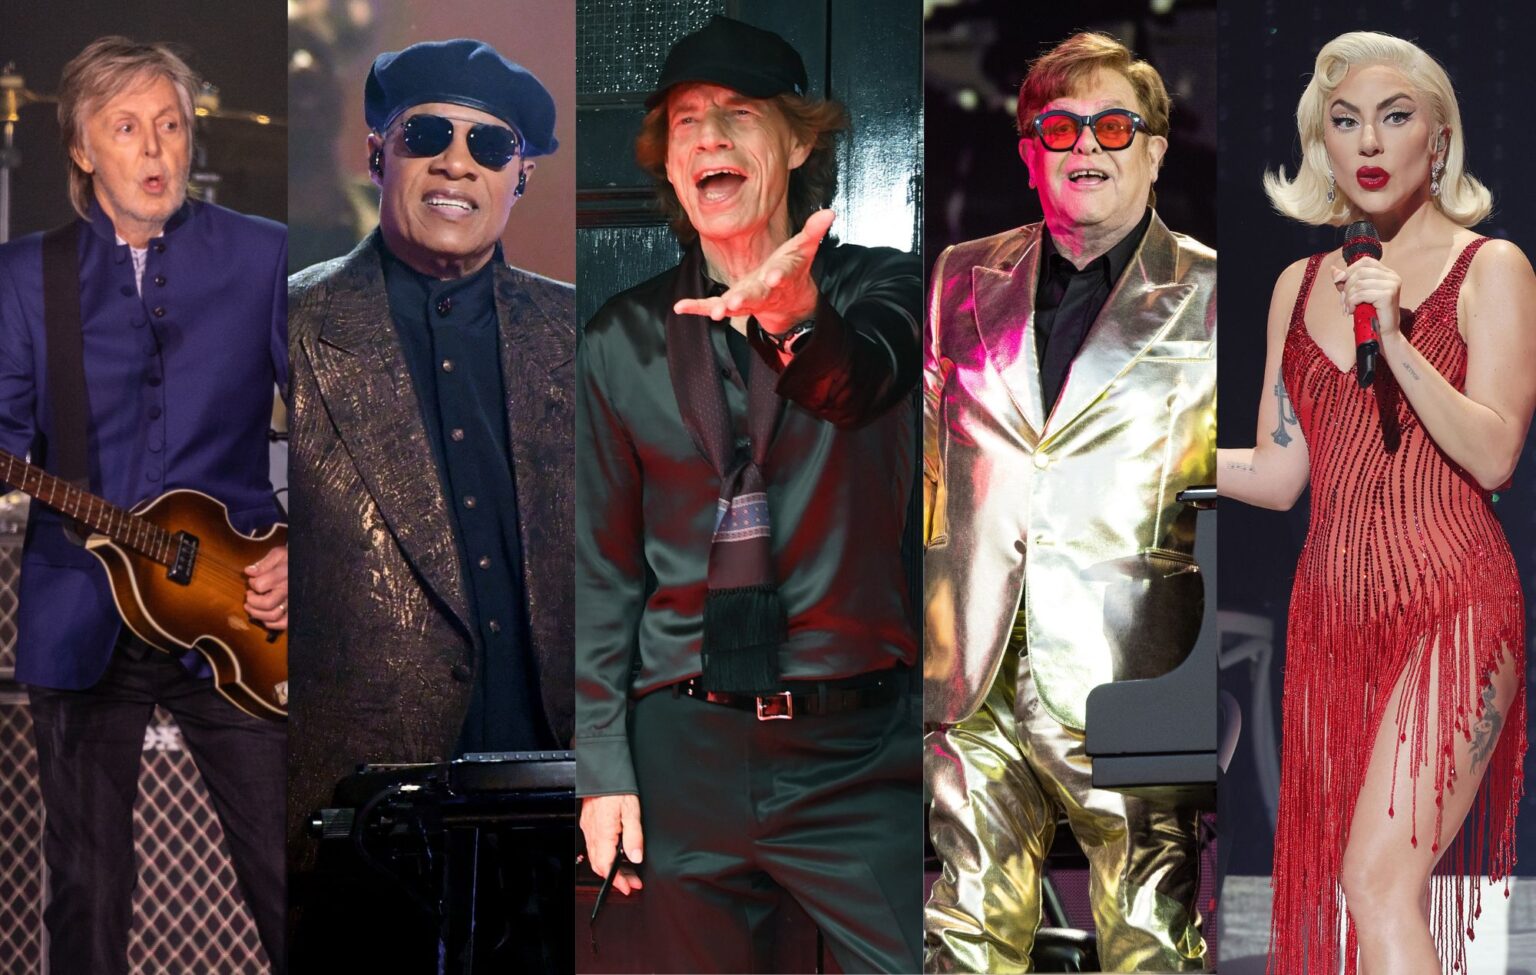 'Hackney Diamonds' dos Rolling Stones apresenta Paul McCartney, Lady Gaga, Elton John e Stevie Wonder